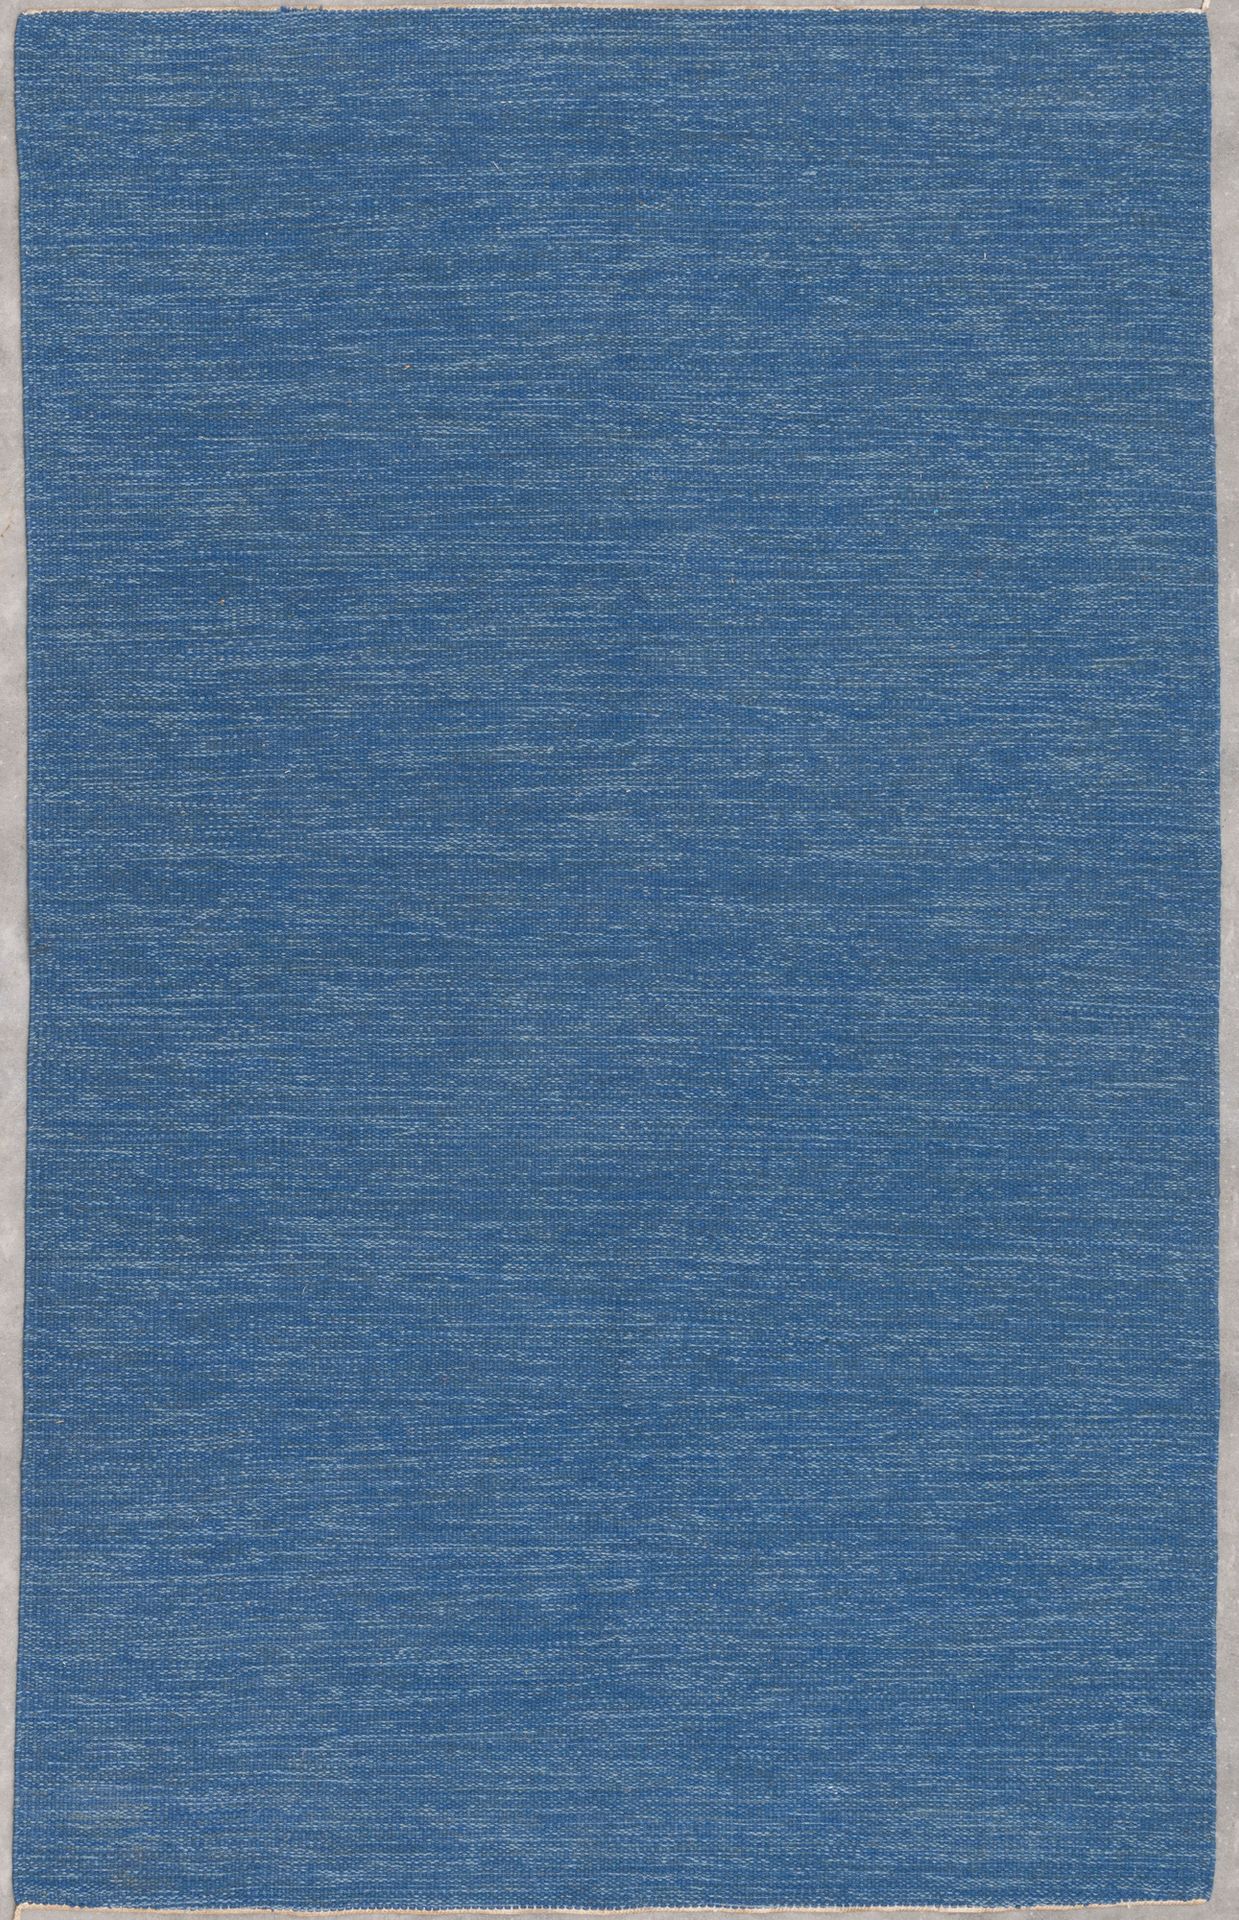 TRAVAIL SCANDINAVE Tapis
Laine.
Tapijt
Wol.
Circa 1960.
303 x 193 cm